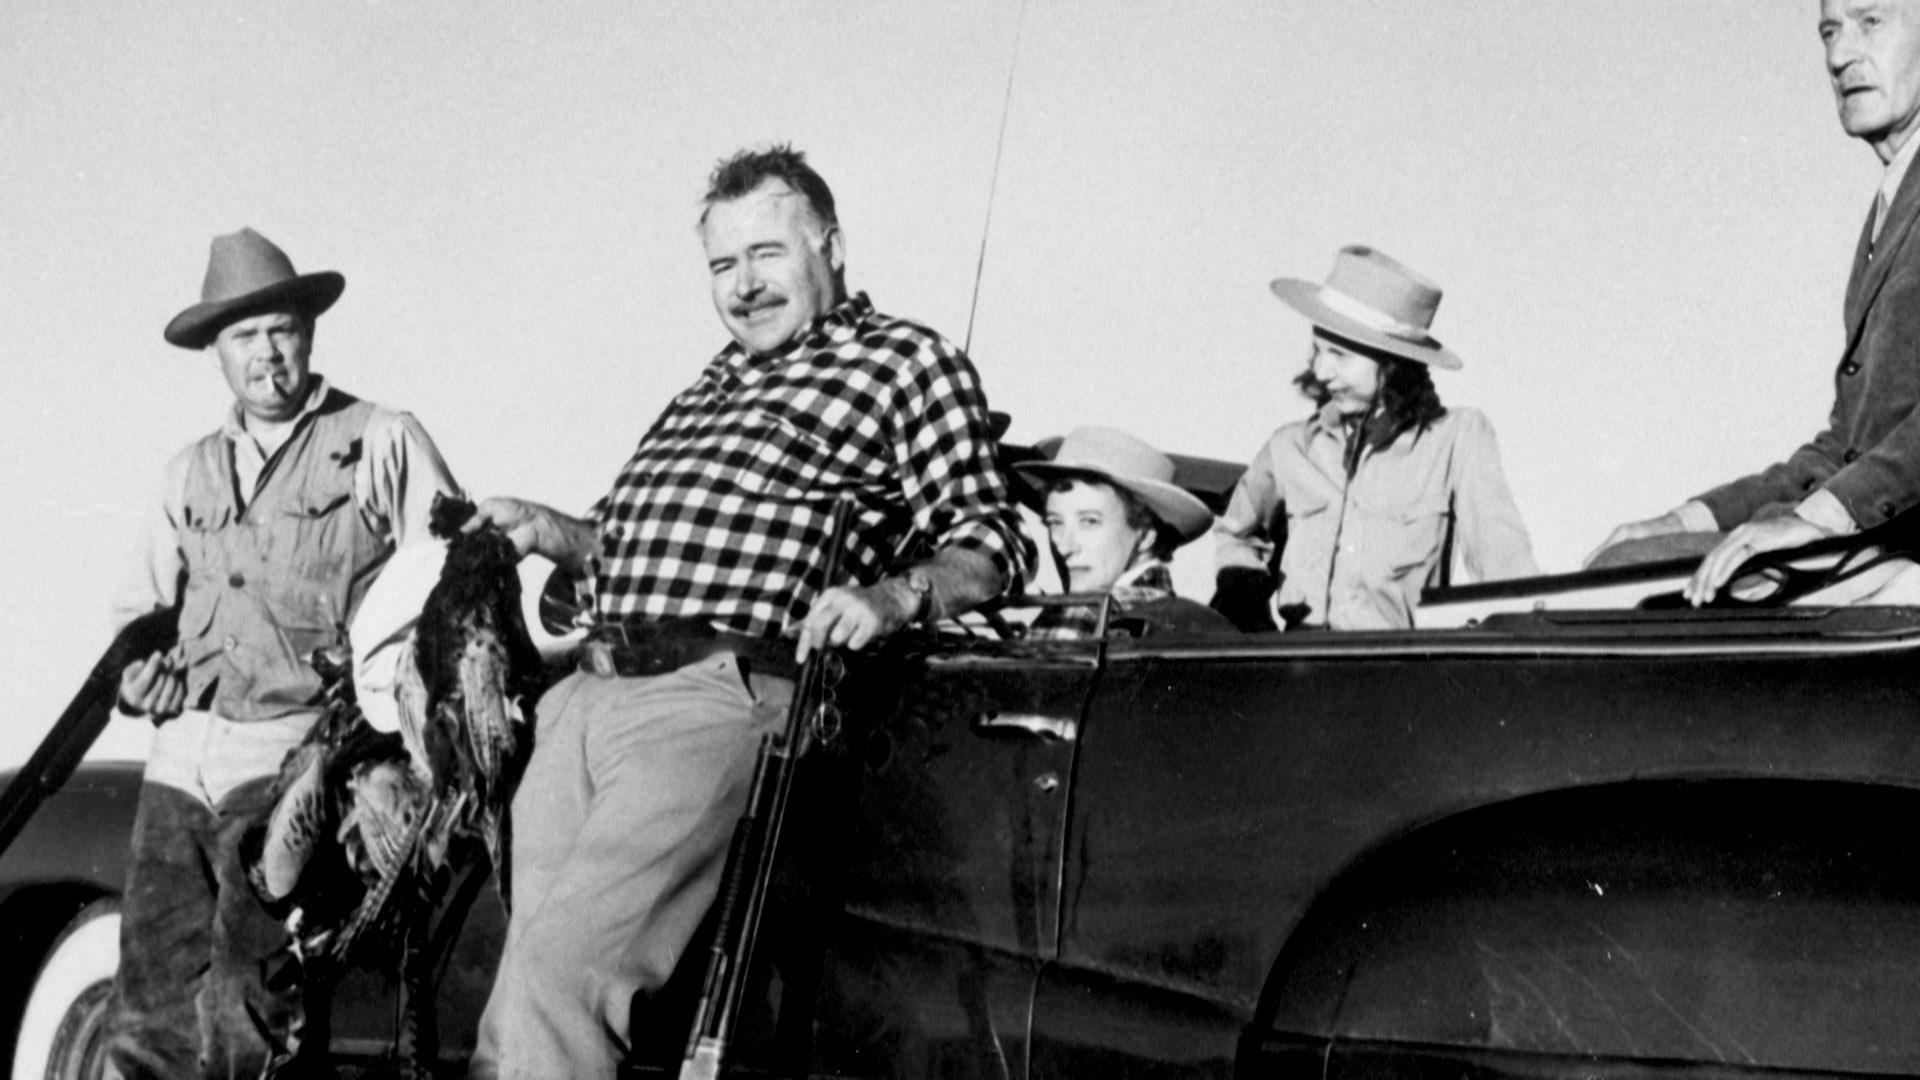 Preview of "Idaho’s Hemingway"